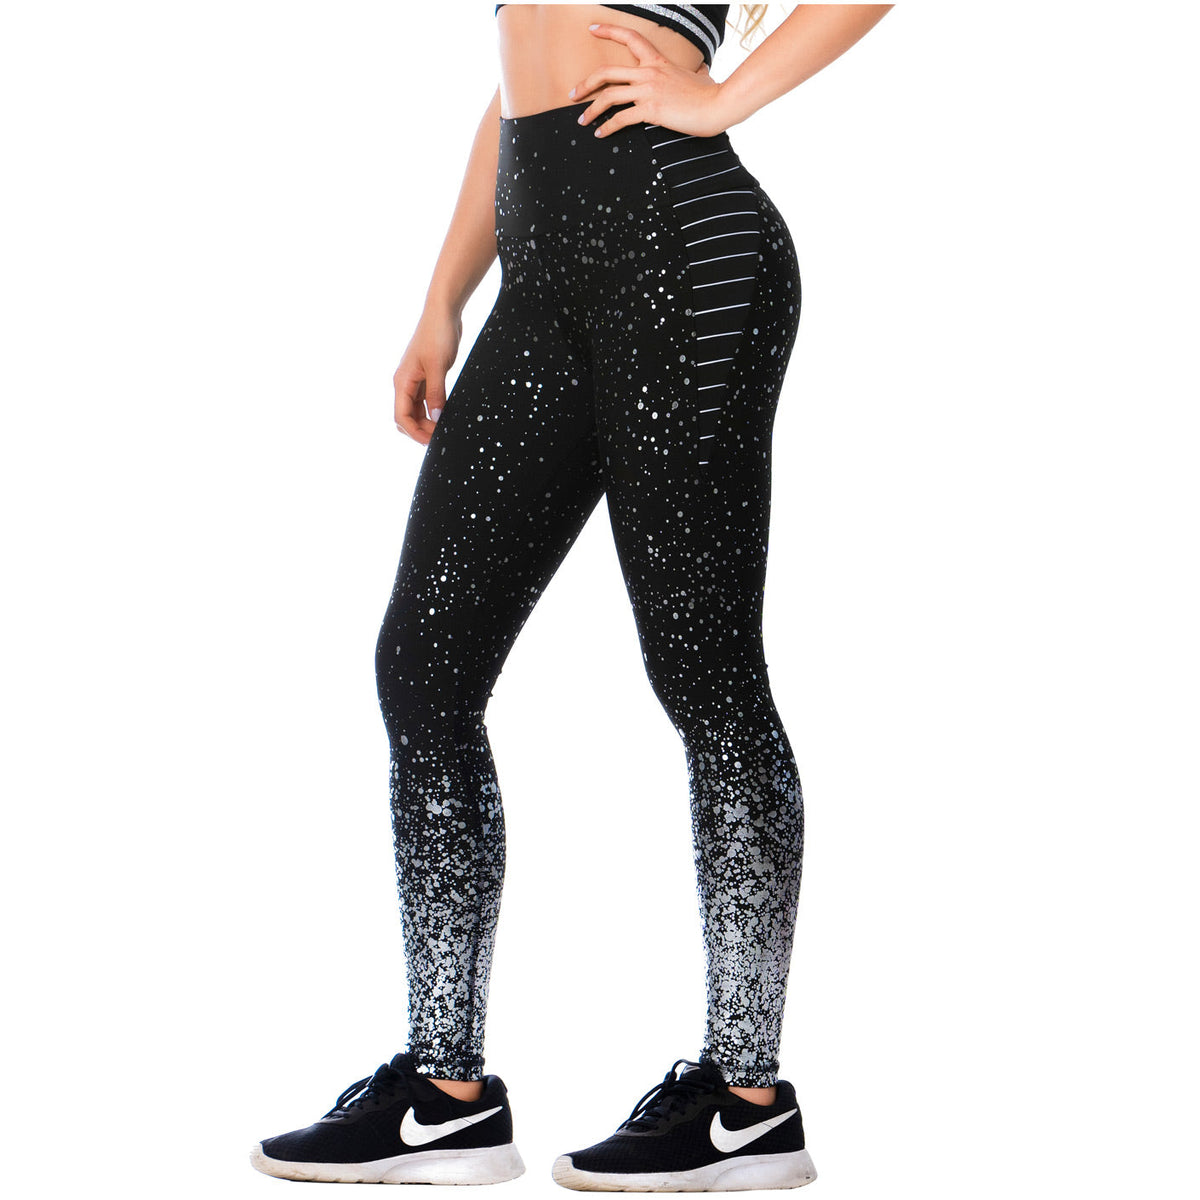 FLEXMEE 946166  High-Waisted Shimmer Print Black Gym Leggings - Showmee  Store